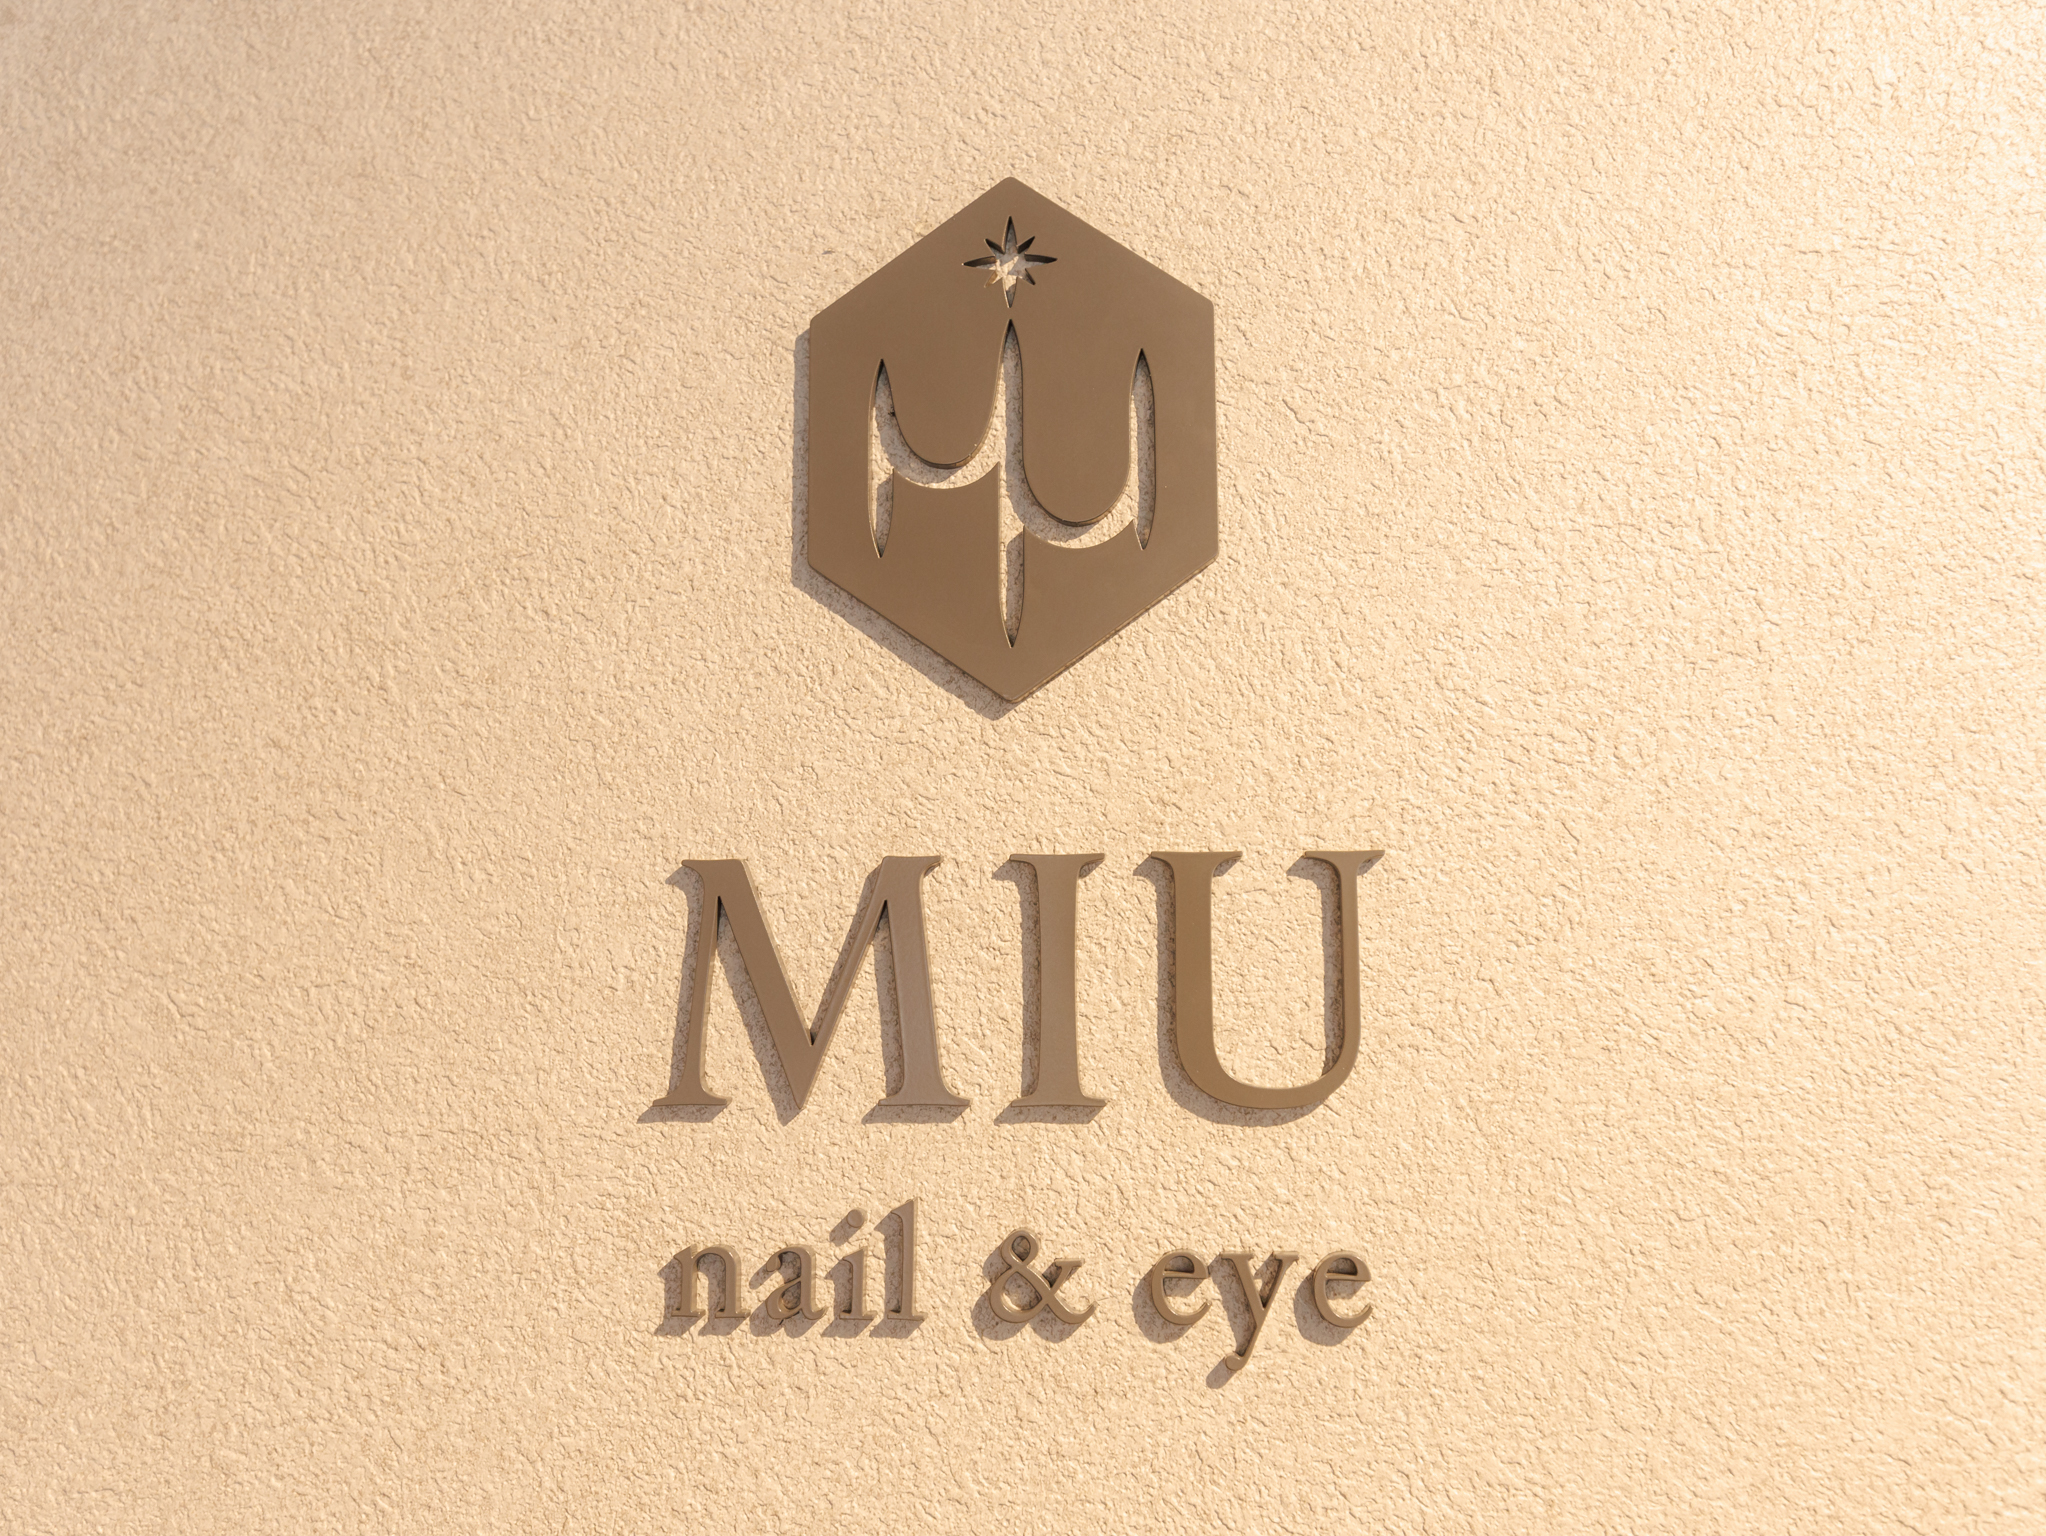 MIU nail&eyeのメイン写真